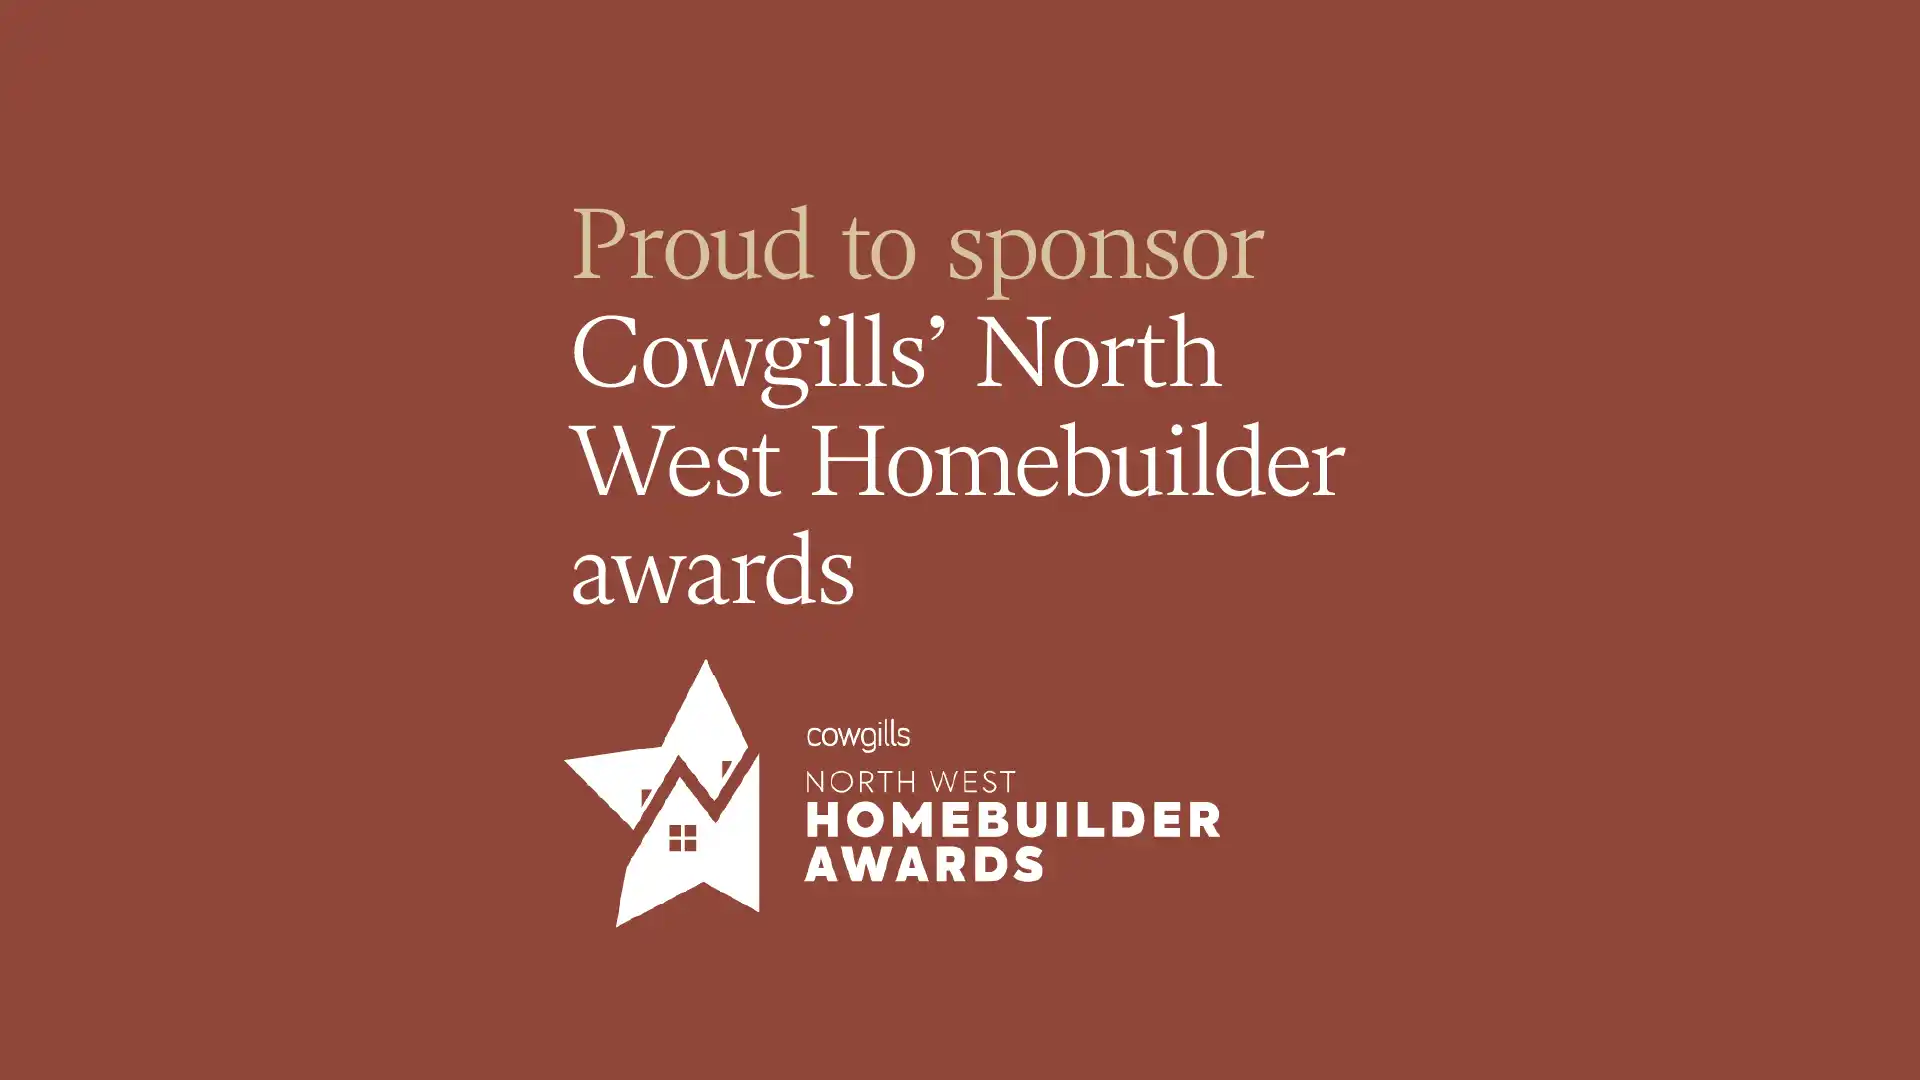 Cowgills North West Homebuilder Awards